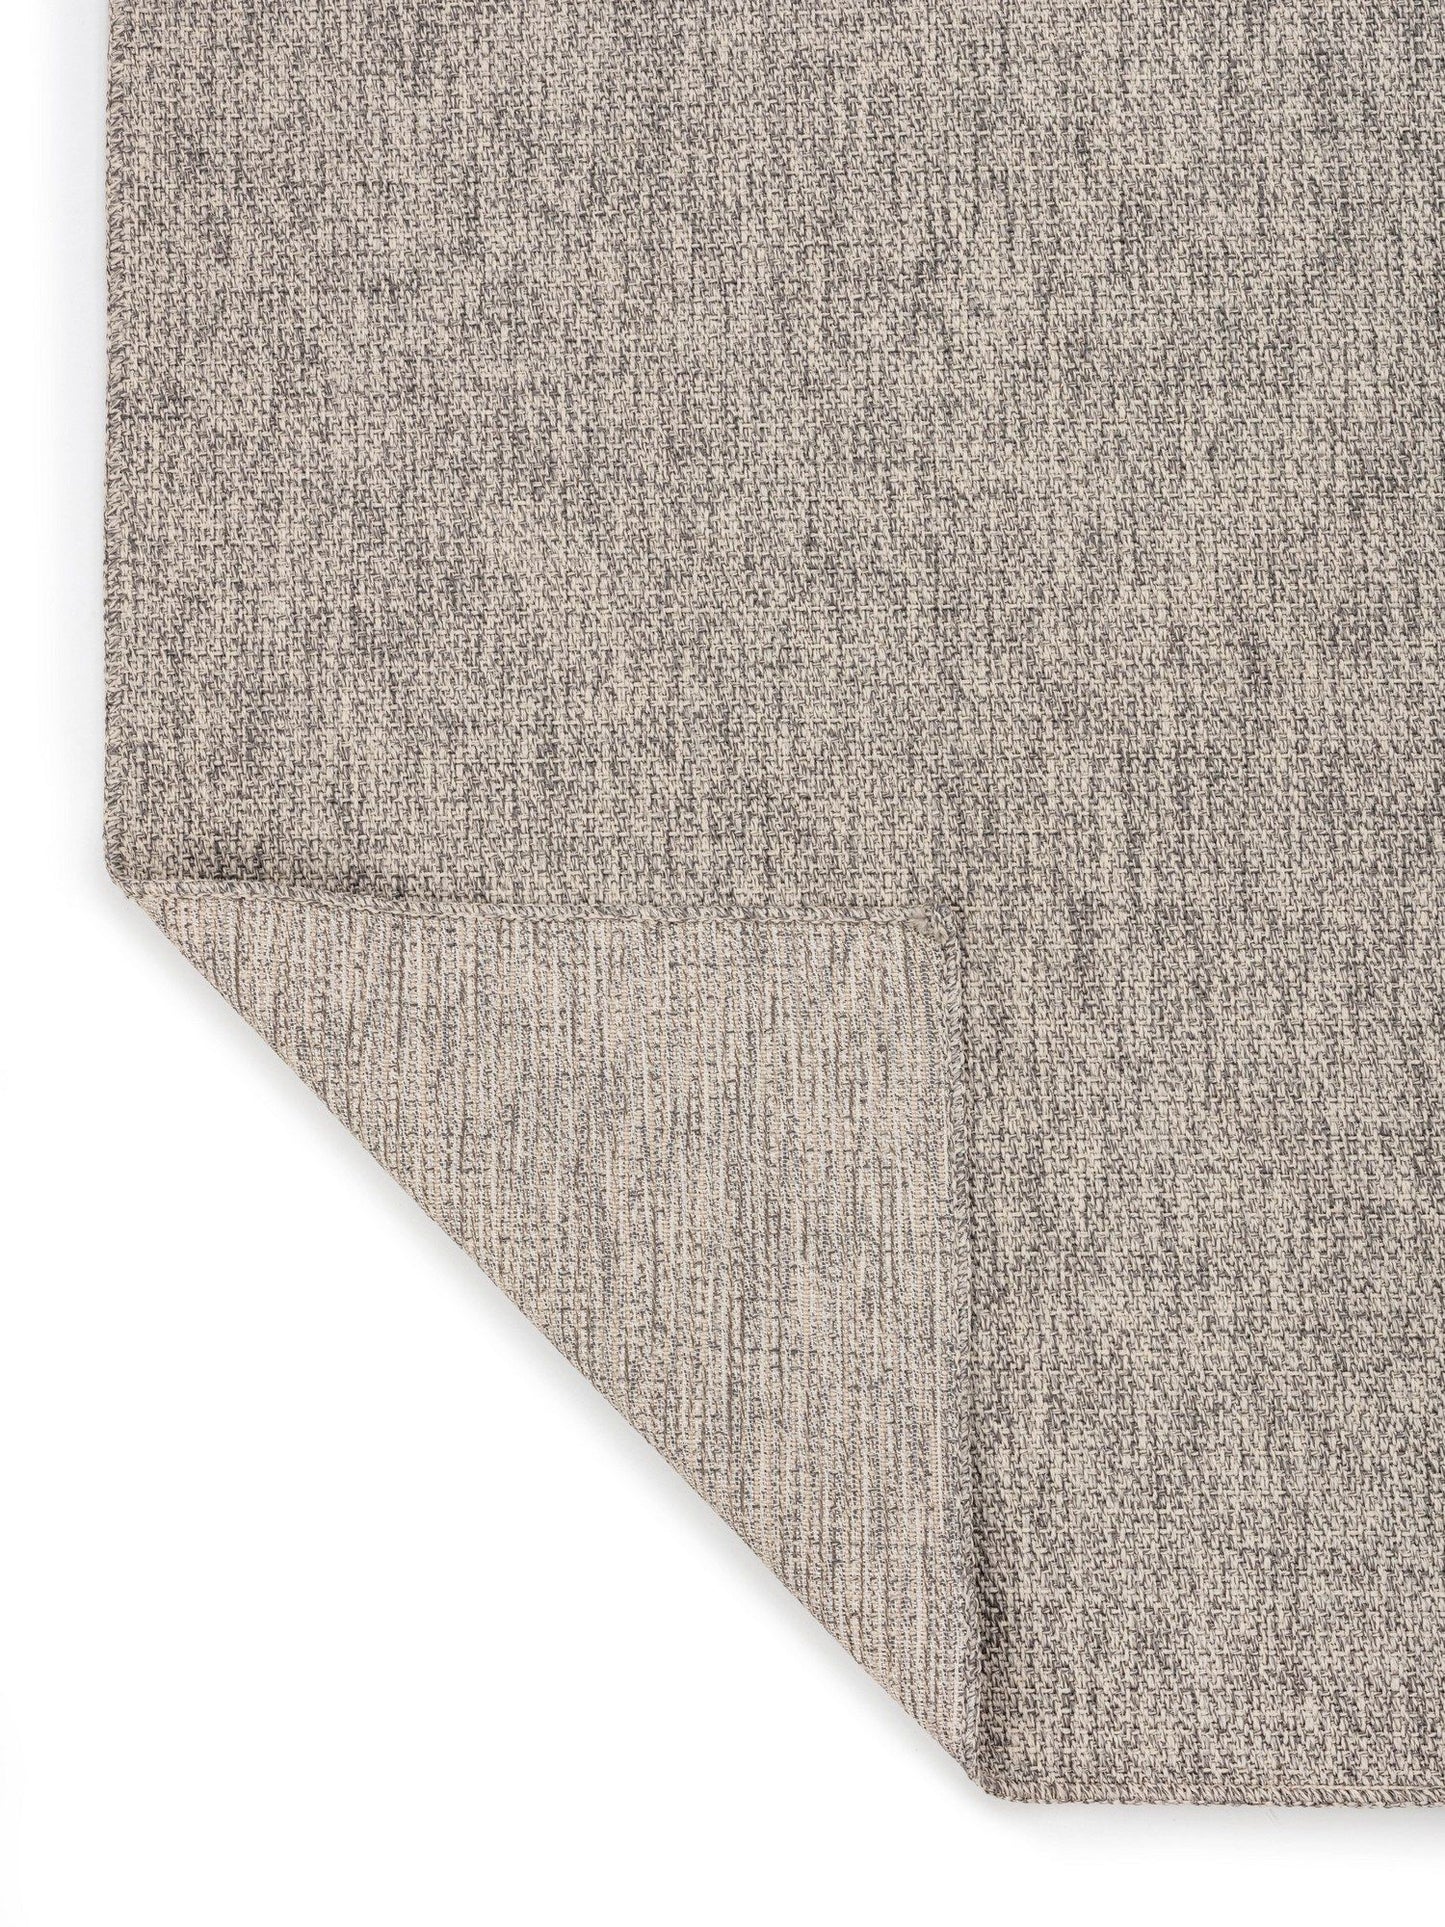 0602 Jut - Grey - Carpet (100 x 200)